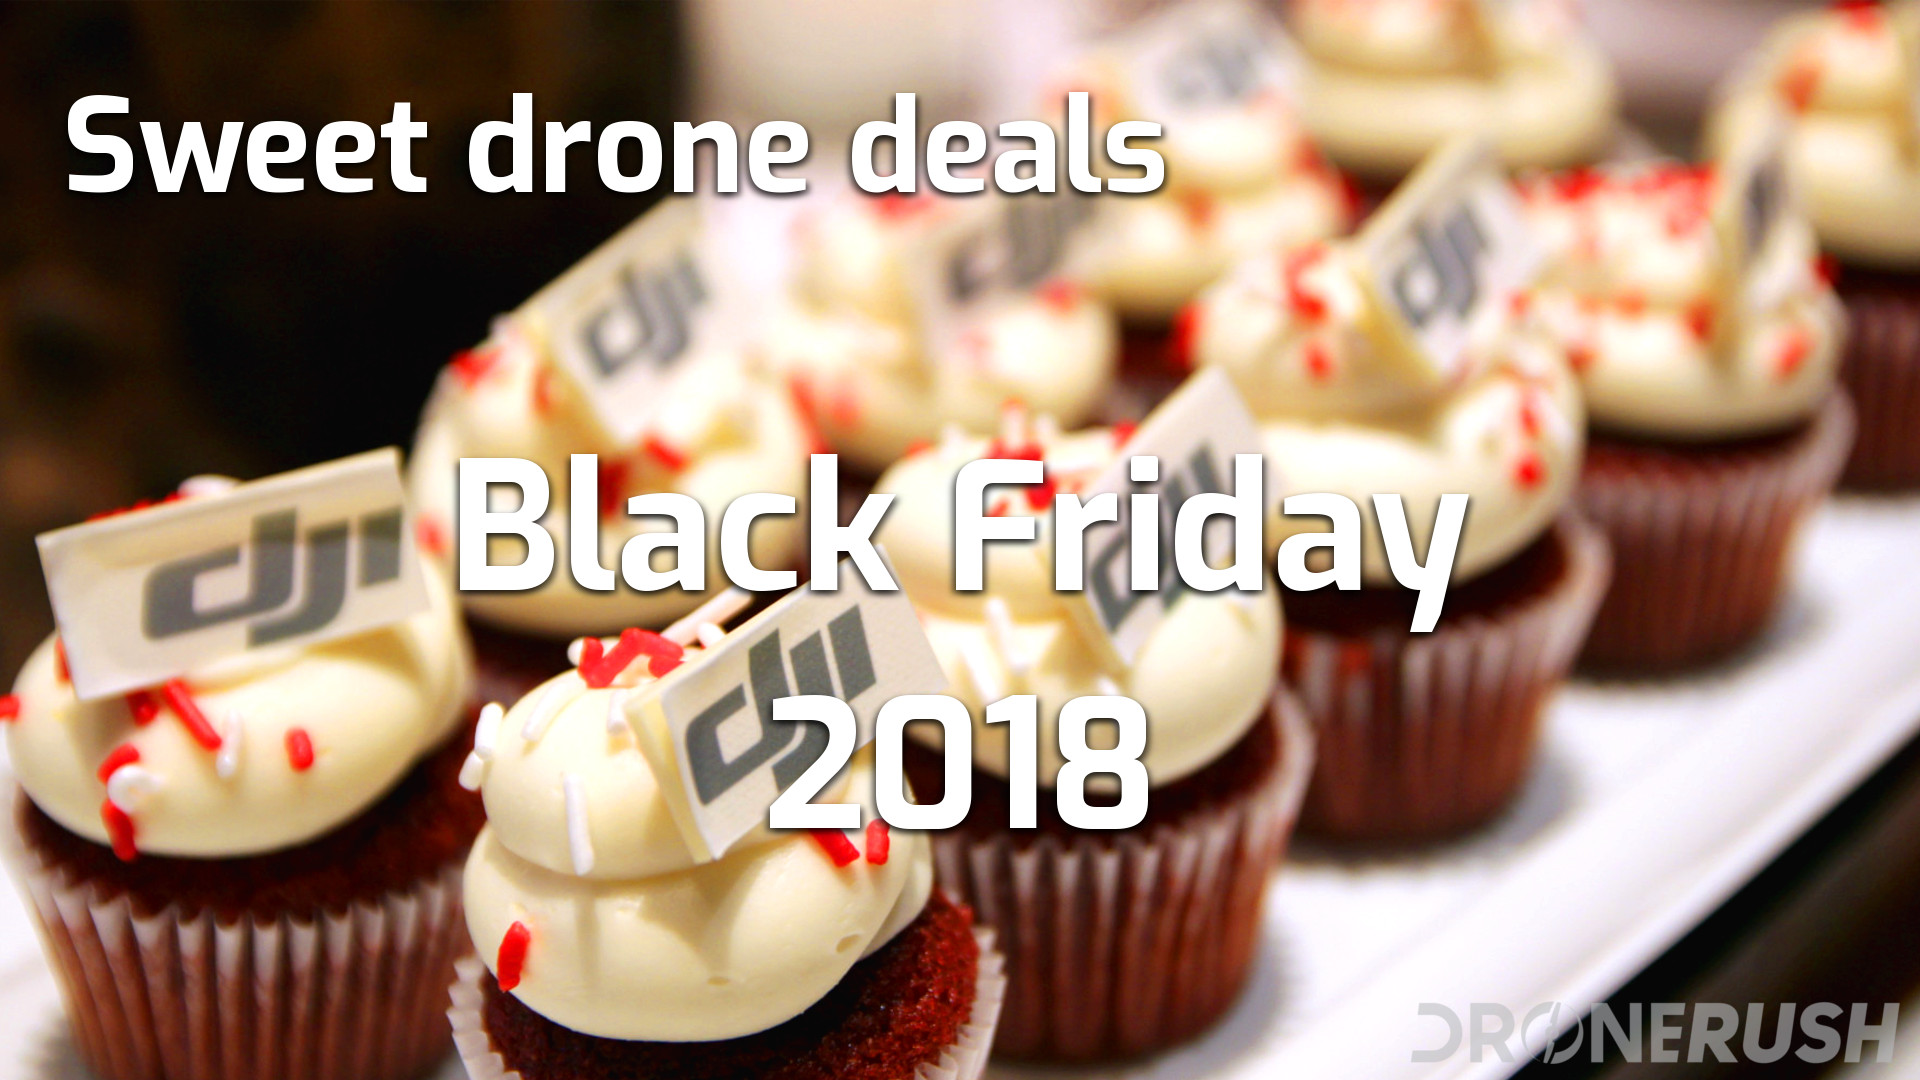 Black Friday 2018 deals DJI cupcakes